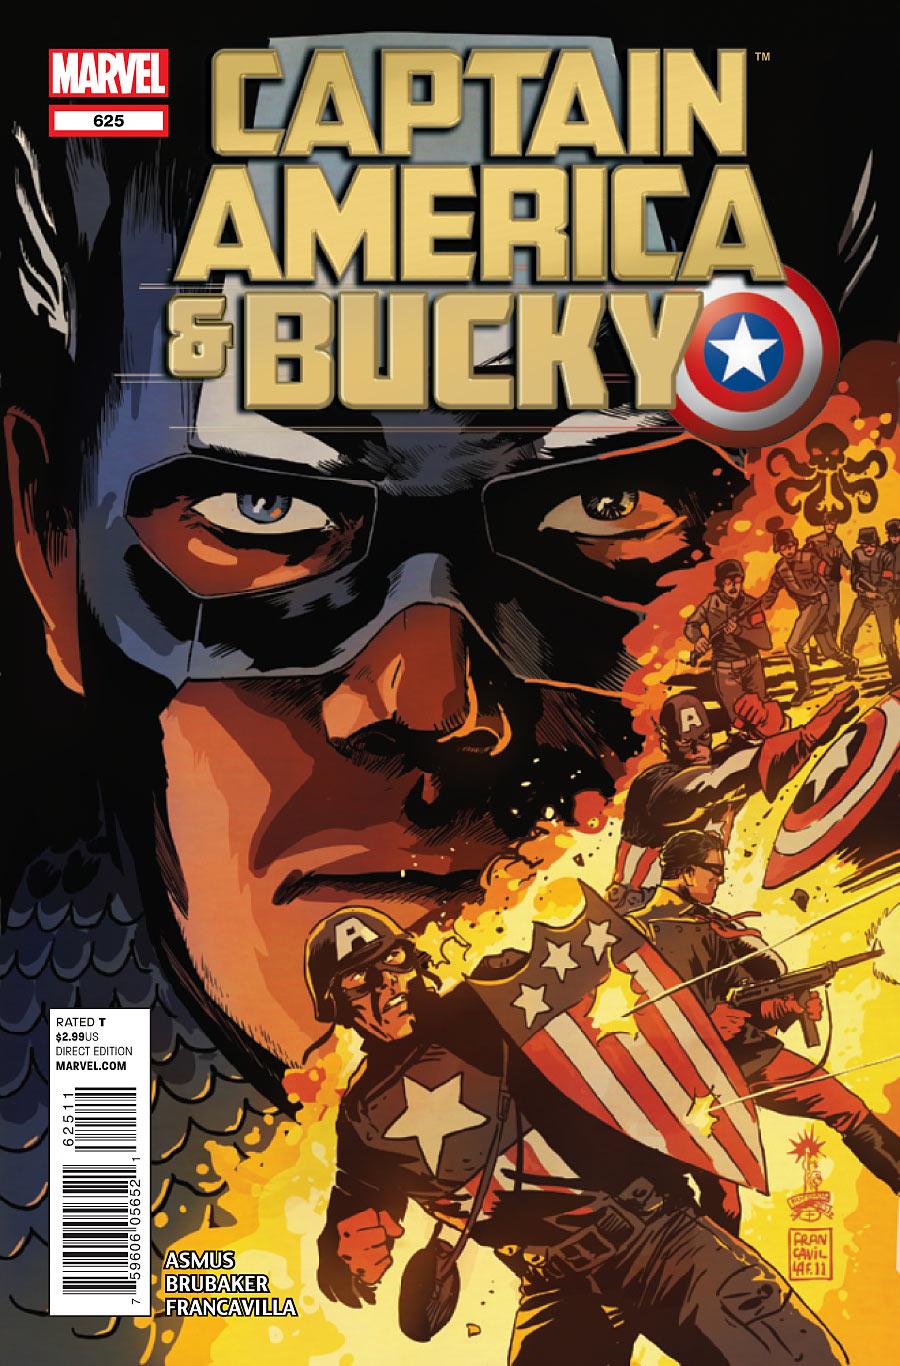 Captain America and Bucky Vol. 1 #625